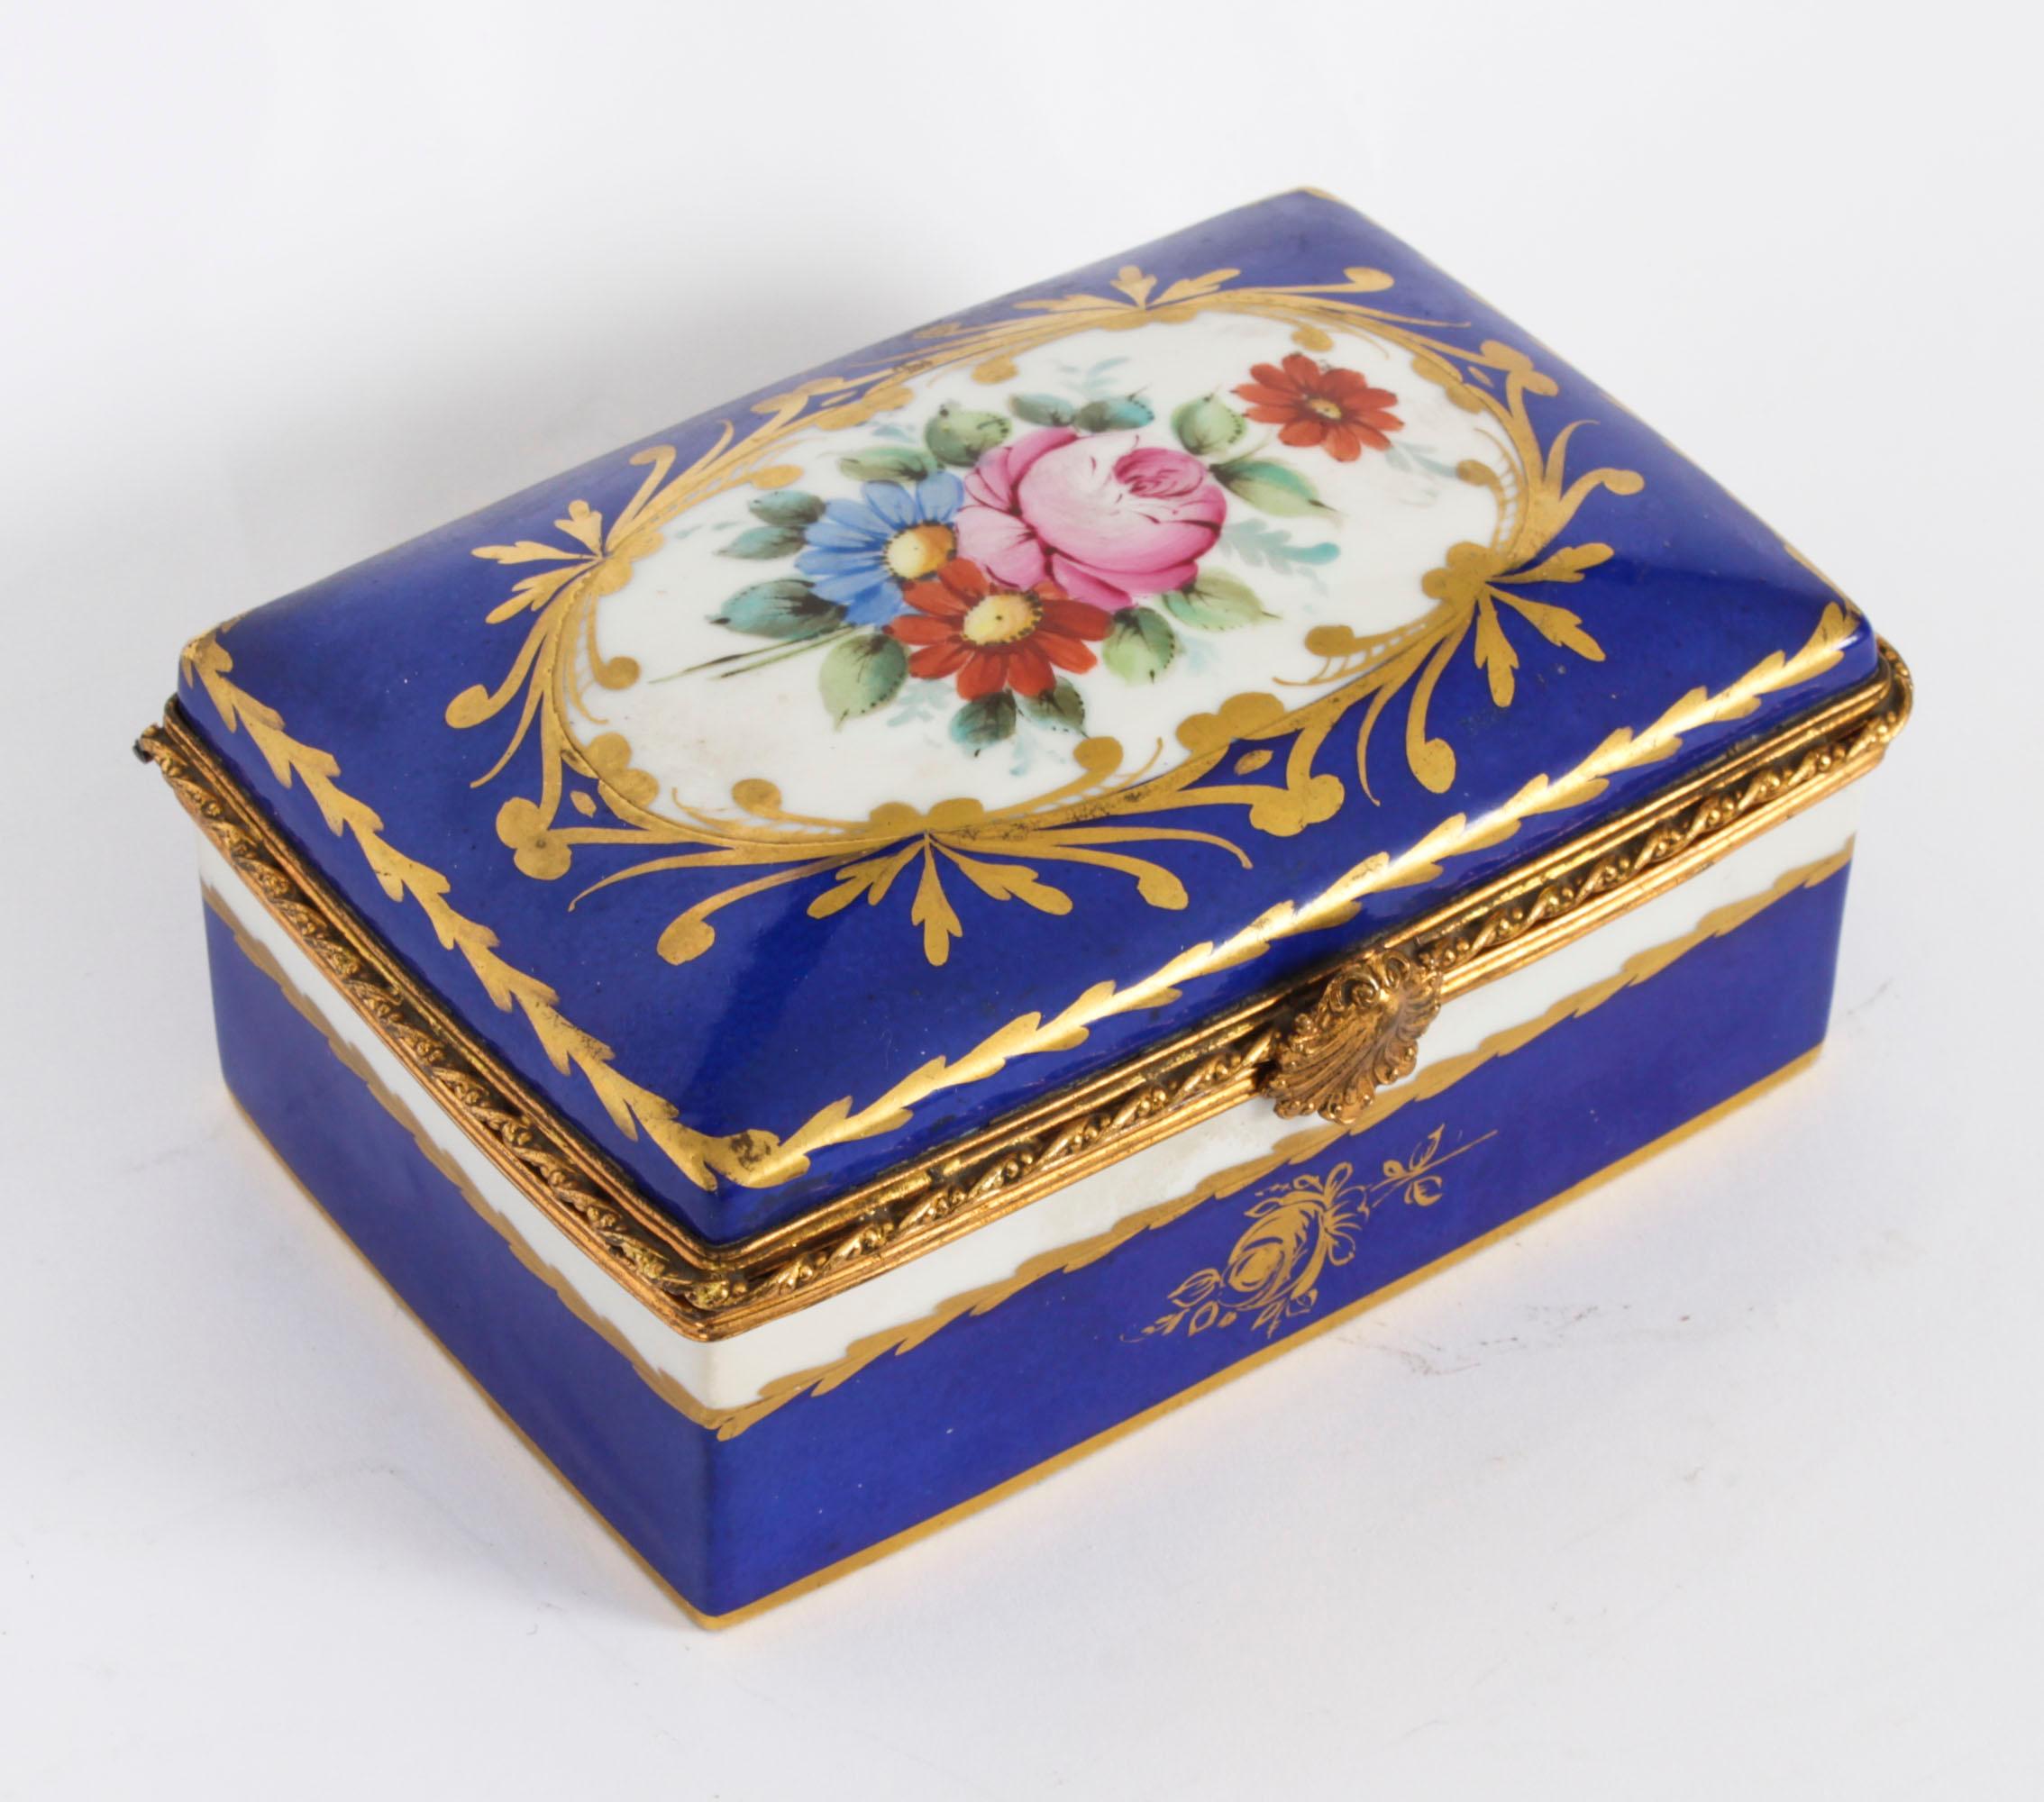 Antique Limoges Royal Blue Ormolu Mounted Casket Box 19h Century For Sale 10